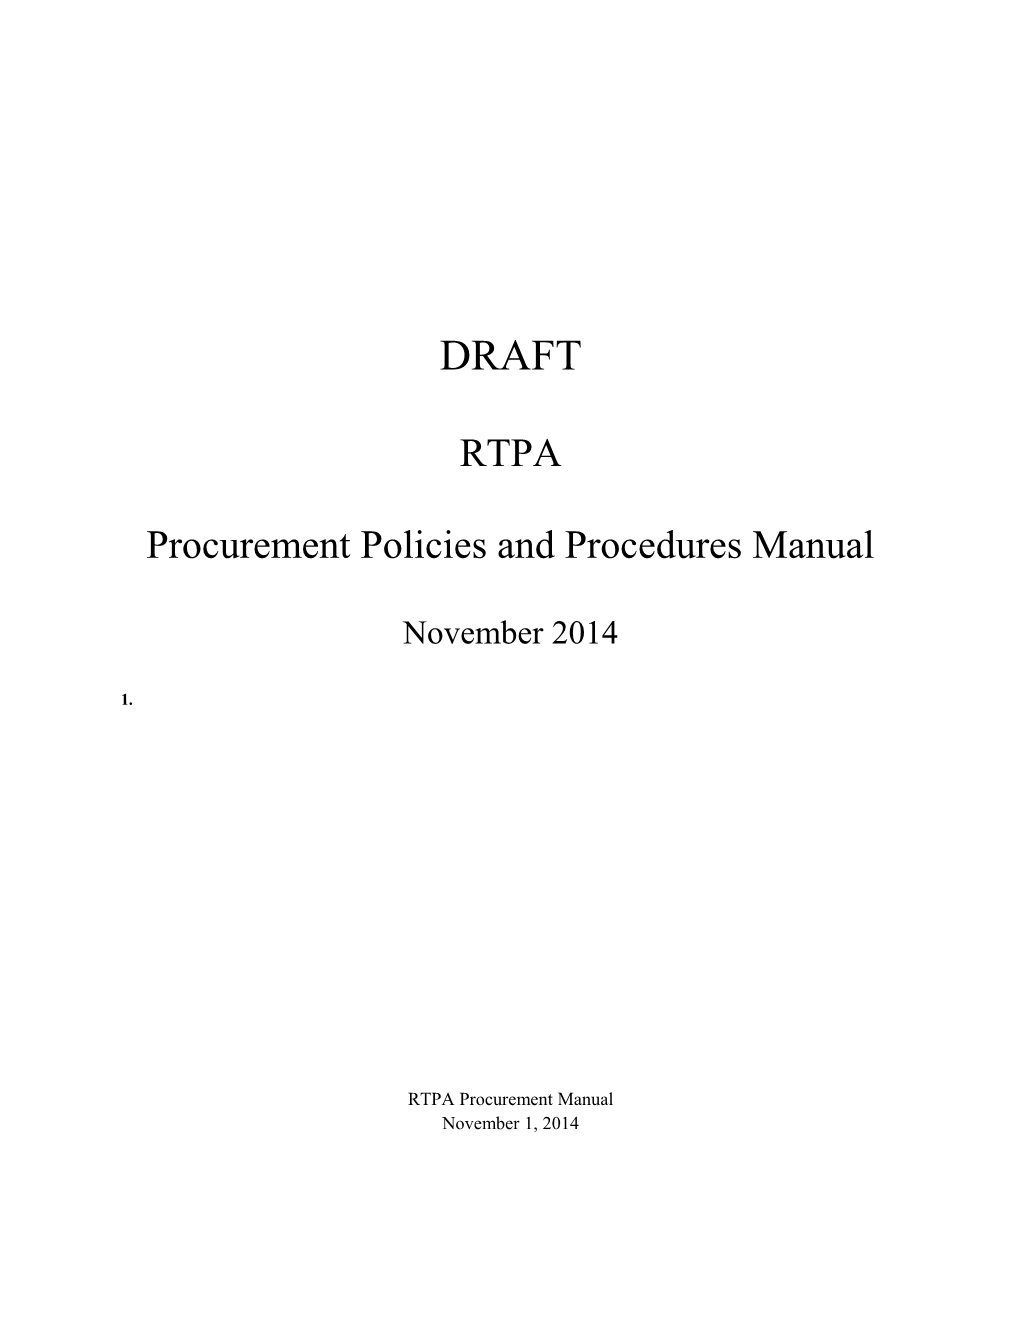 RTPA Procurement Manual